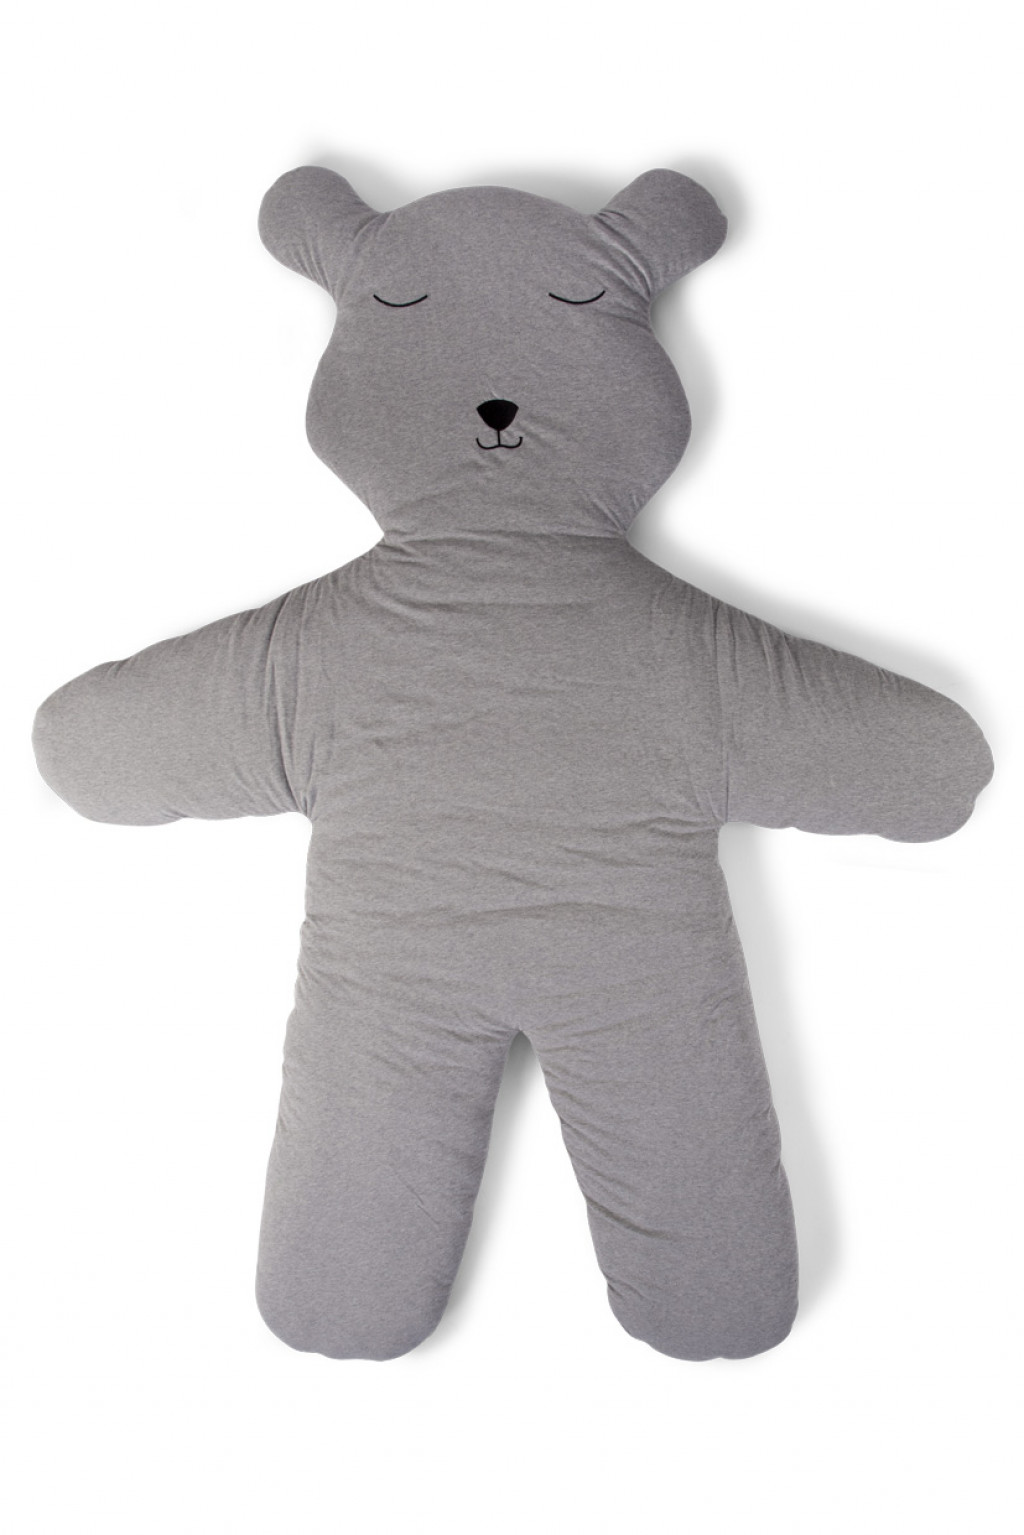 Childhome Hracia deka medveď Teddy Jersey Grey 150cm